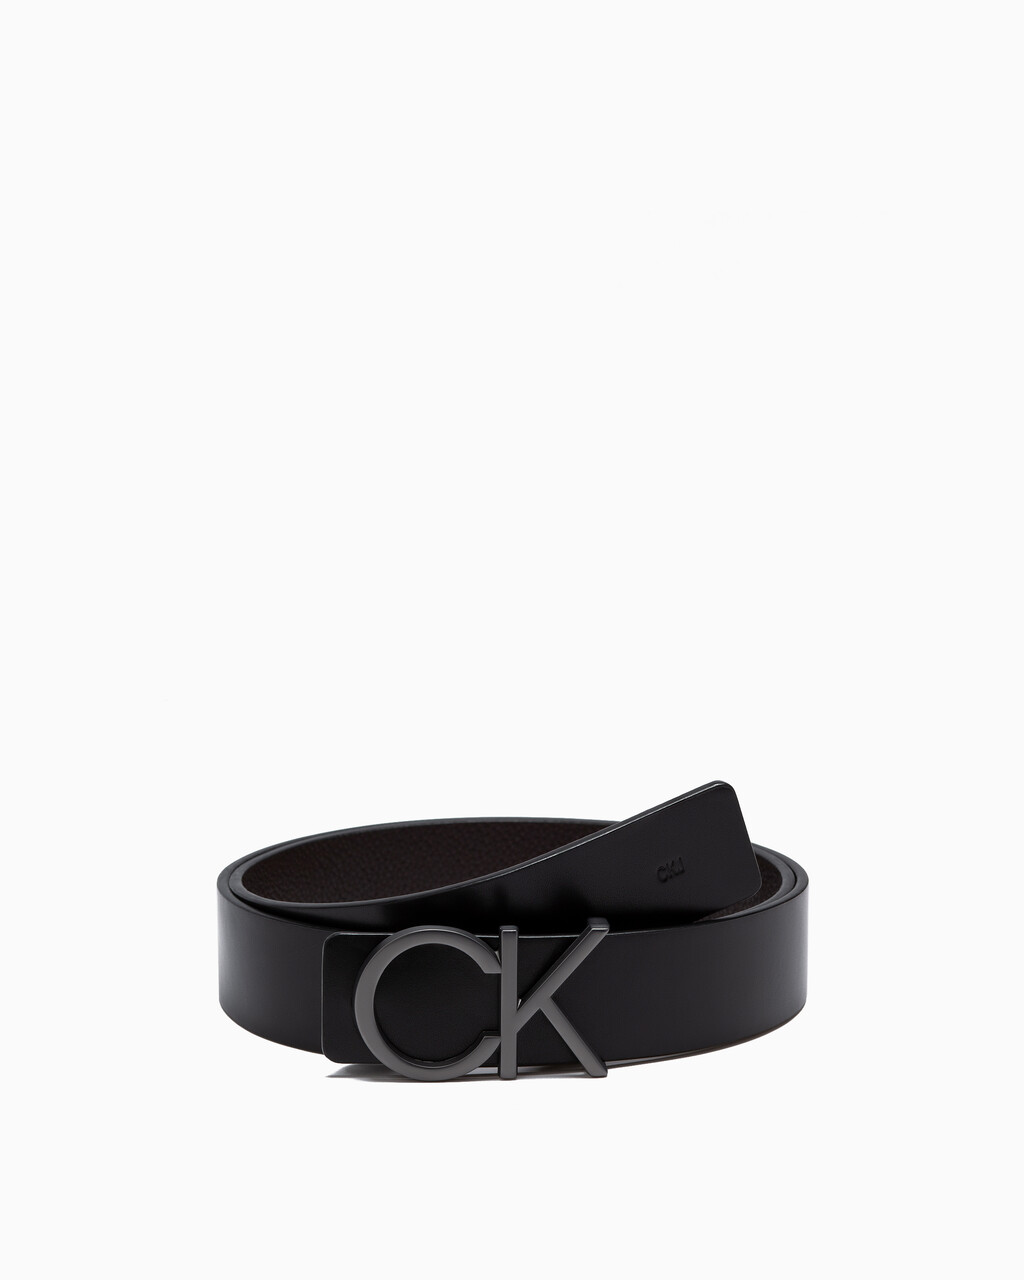 Grunge Premium Italian Leather Belt, BLACK/BTR BROWN, hi-res